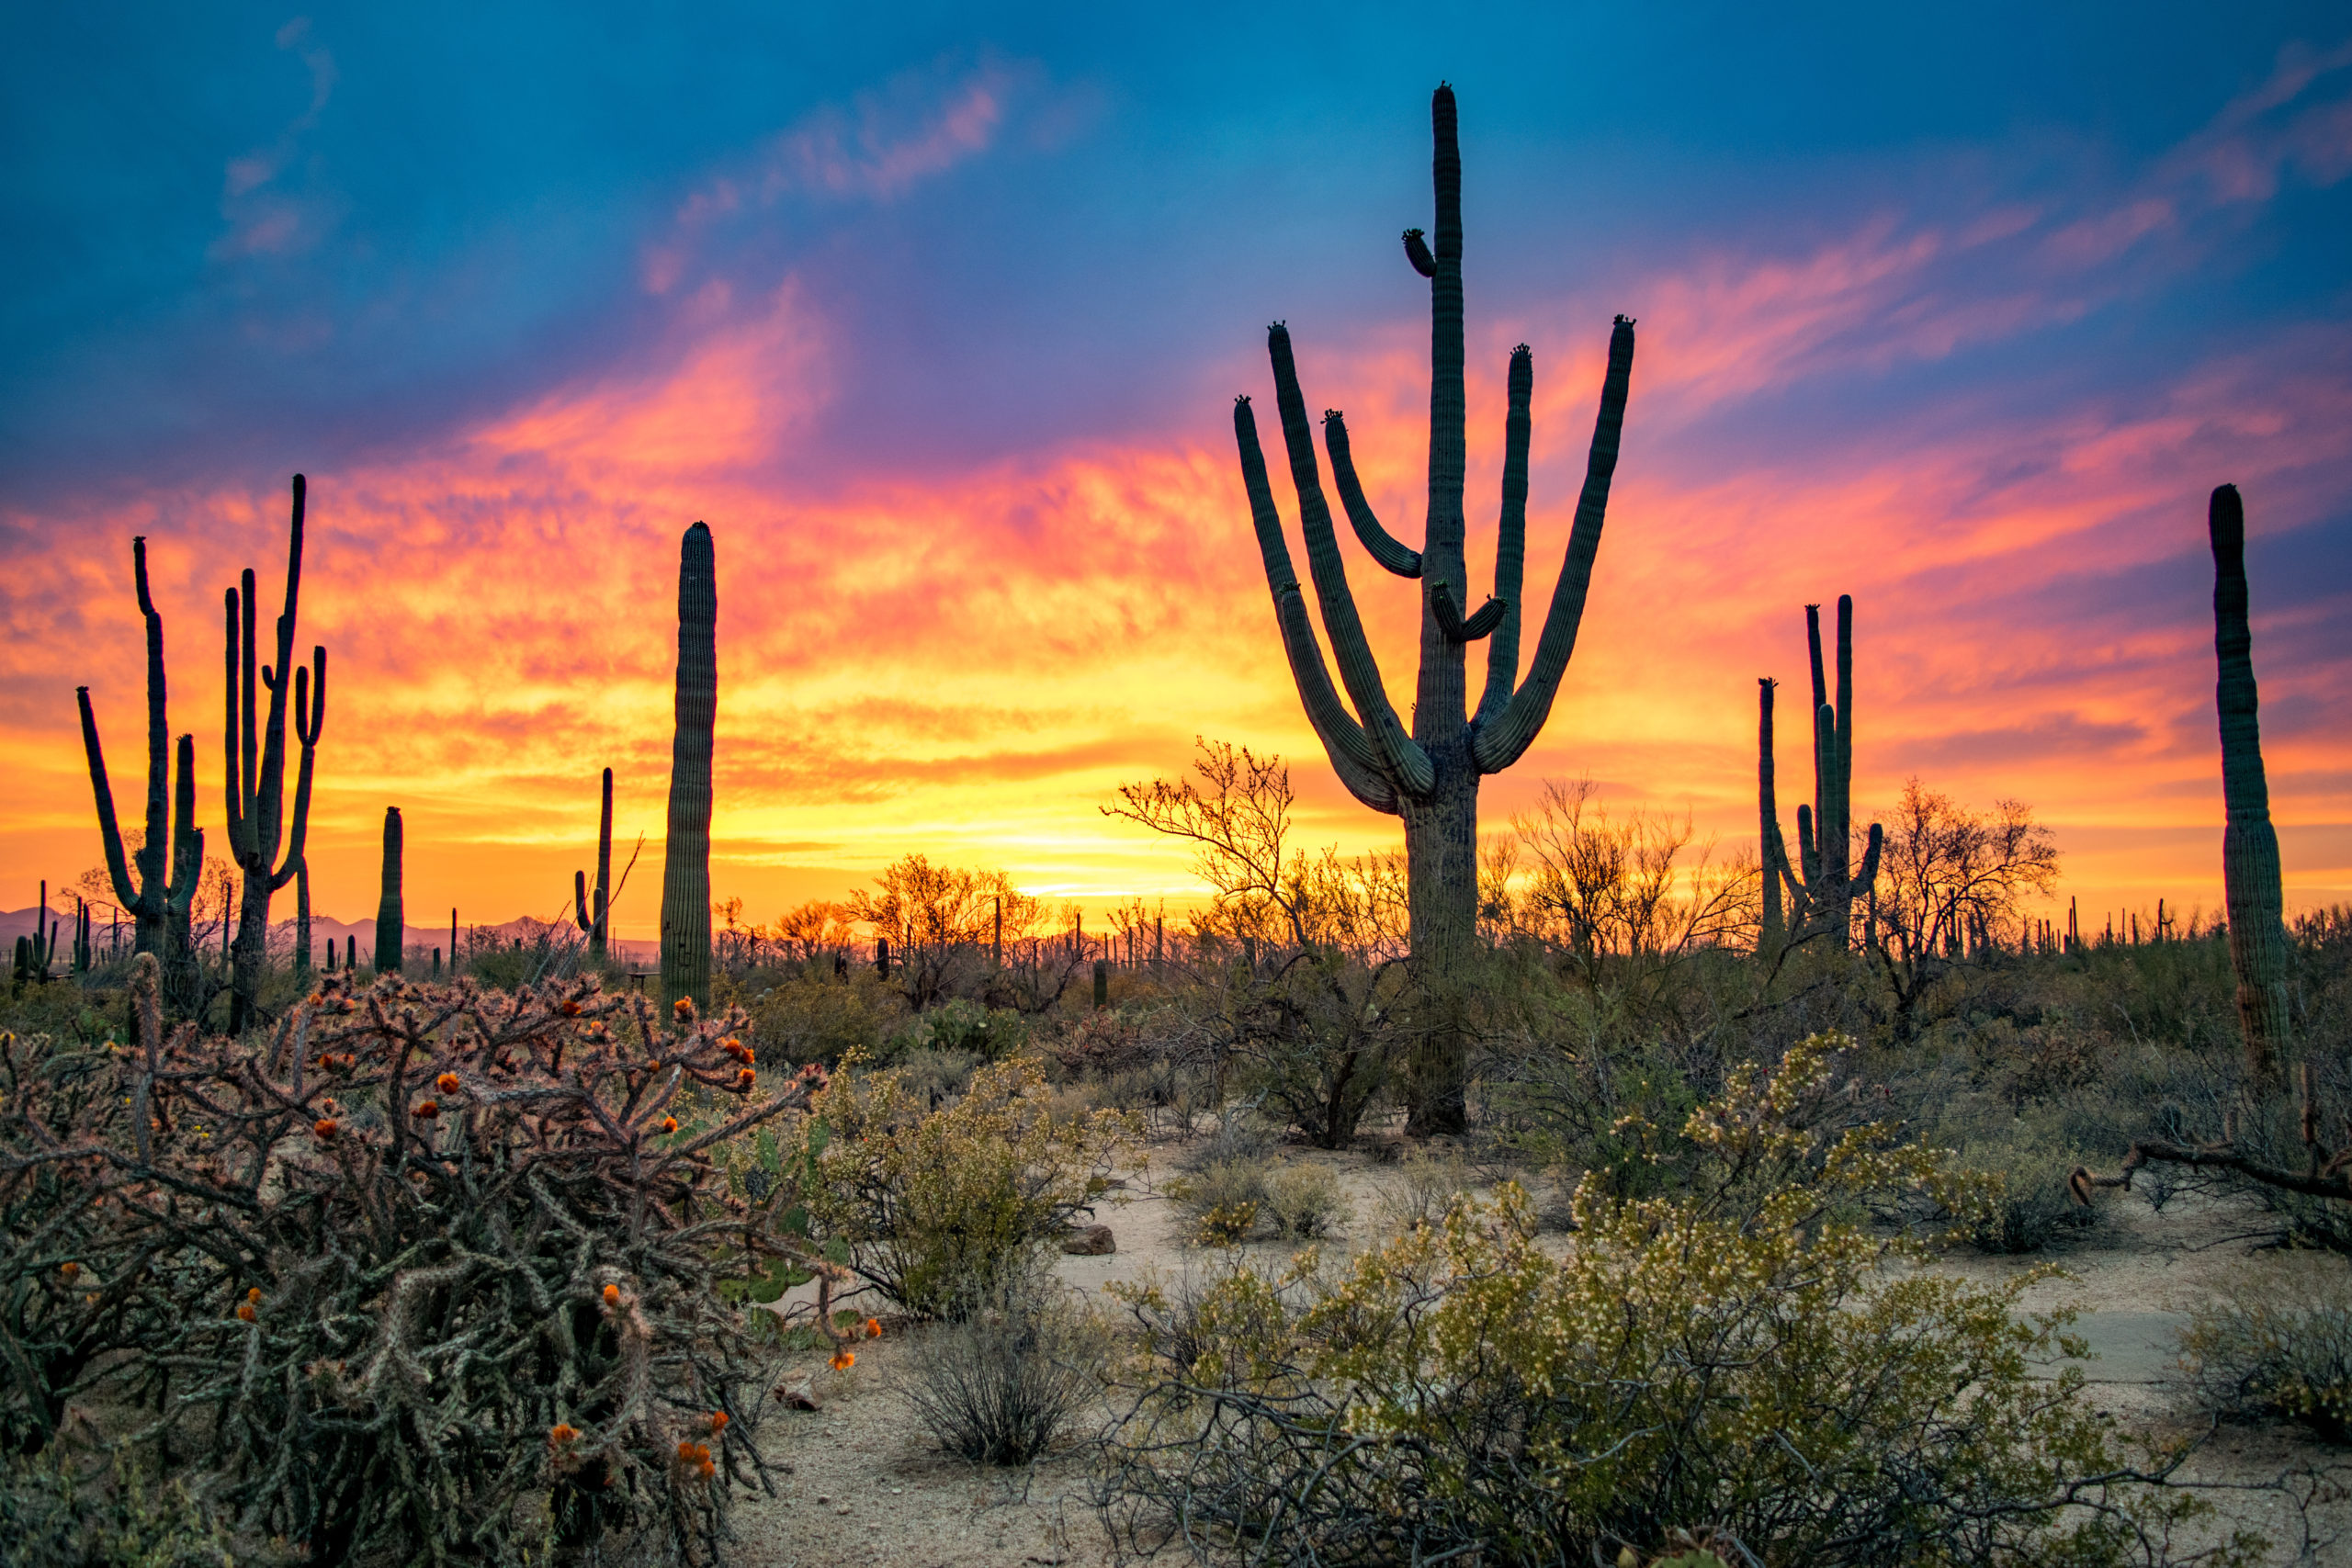 Arizona cactus in the sunset